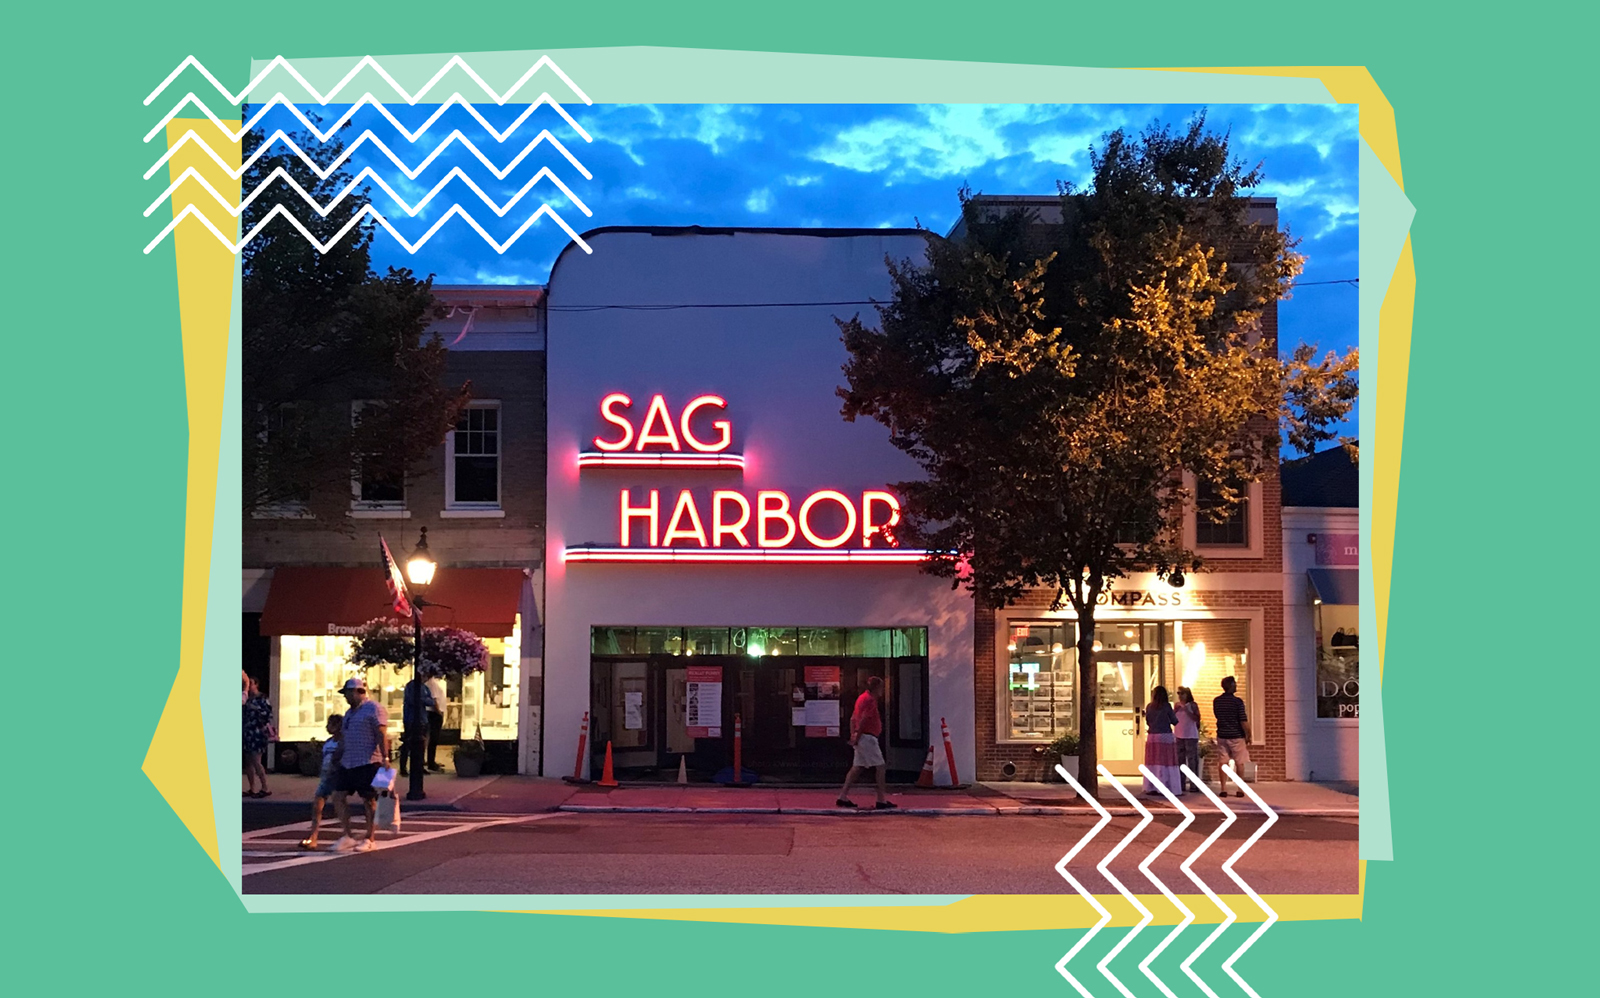 Sag Harbor Cinema (Sag Harbor Cinema via Facebook)